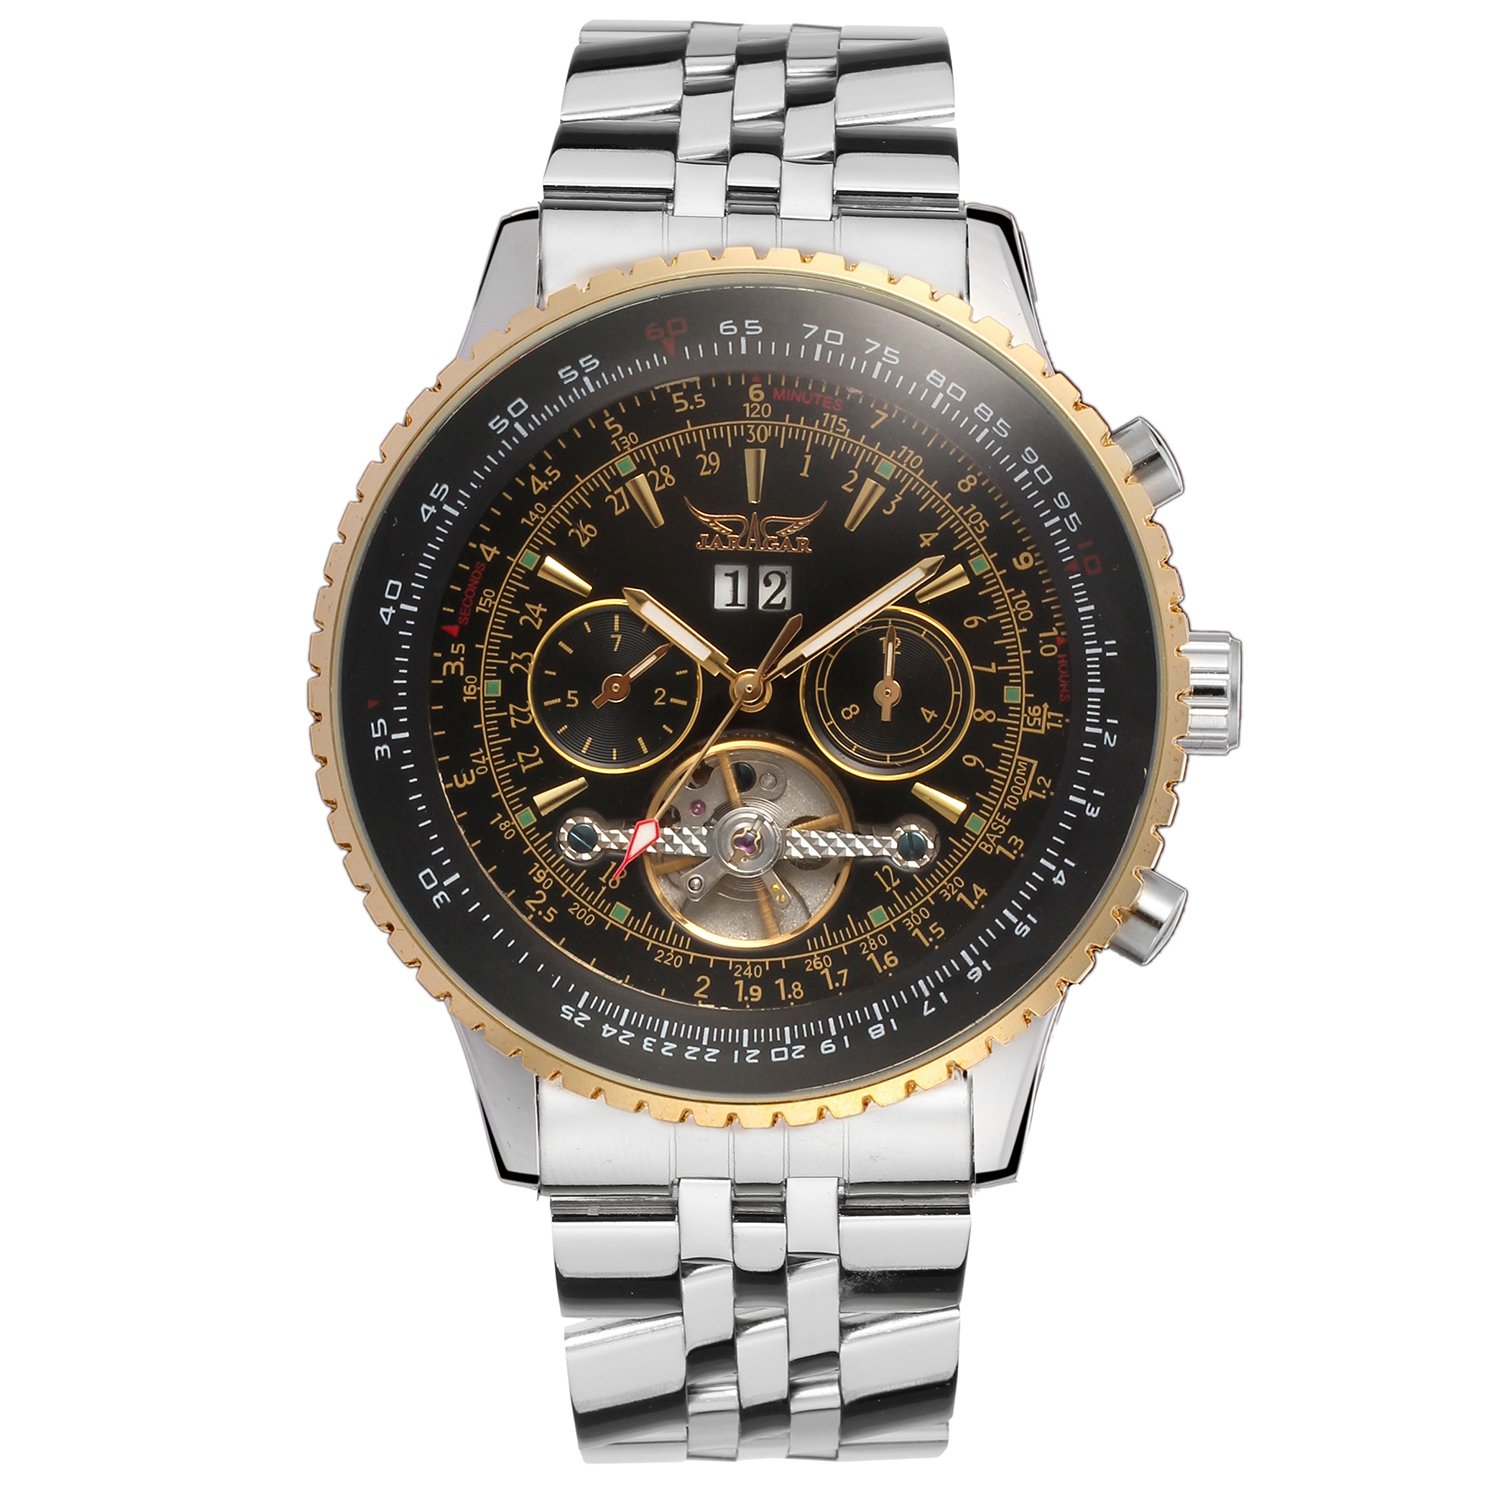 FORSINING Men's Automatic Tourbillon Complete Calendar Wrist Watch JAG034M4